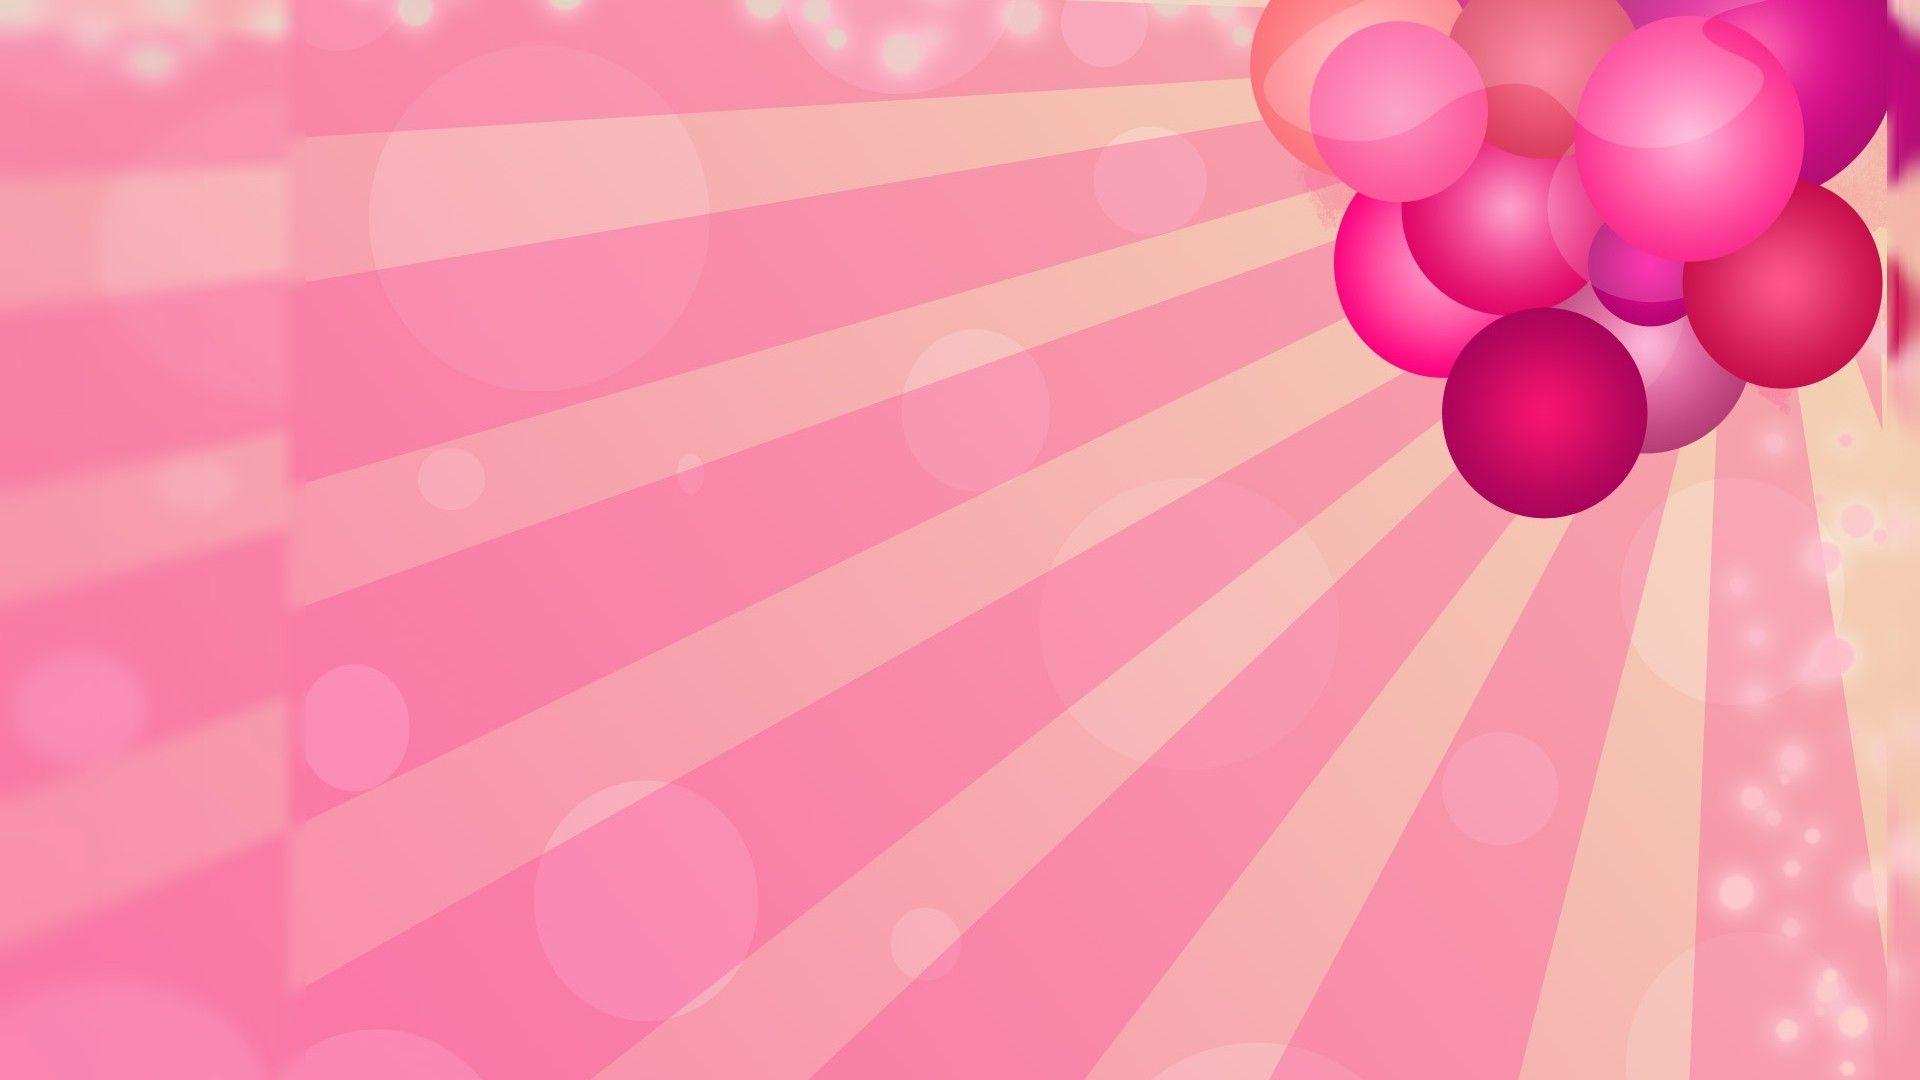 Cute Pink Babies wallpaper (Desktop, Phone, Tablet)